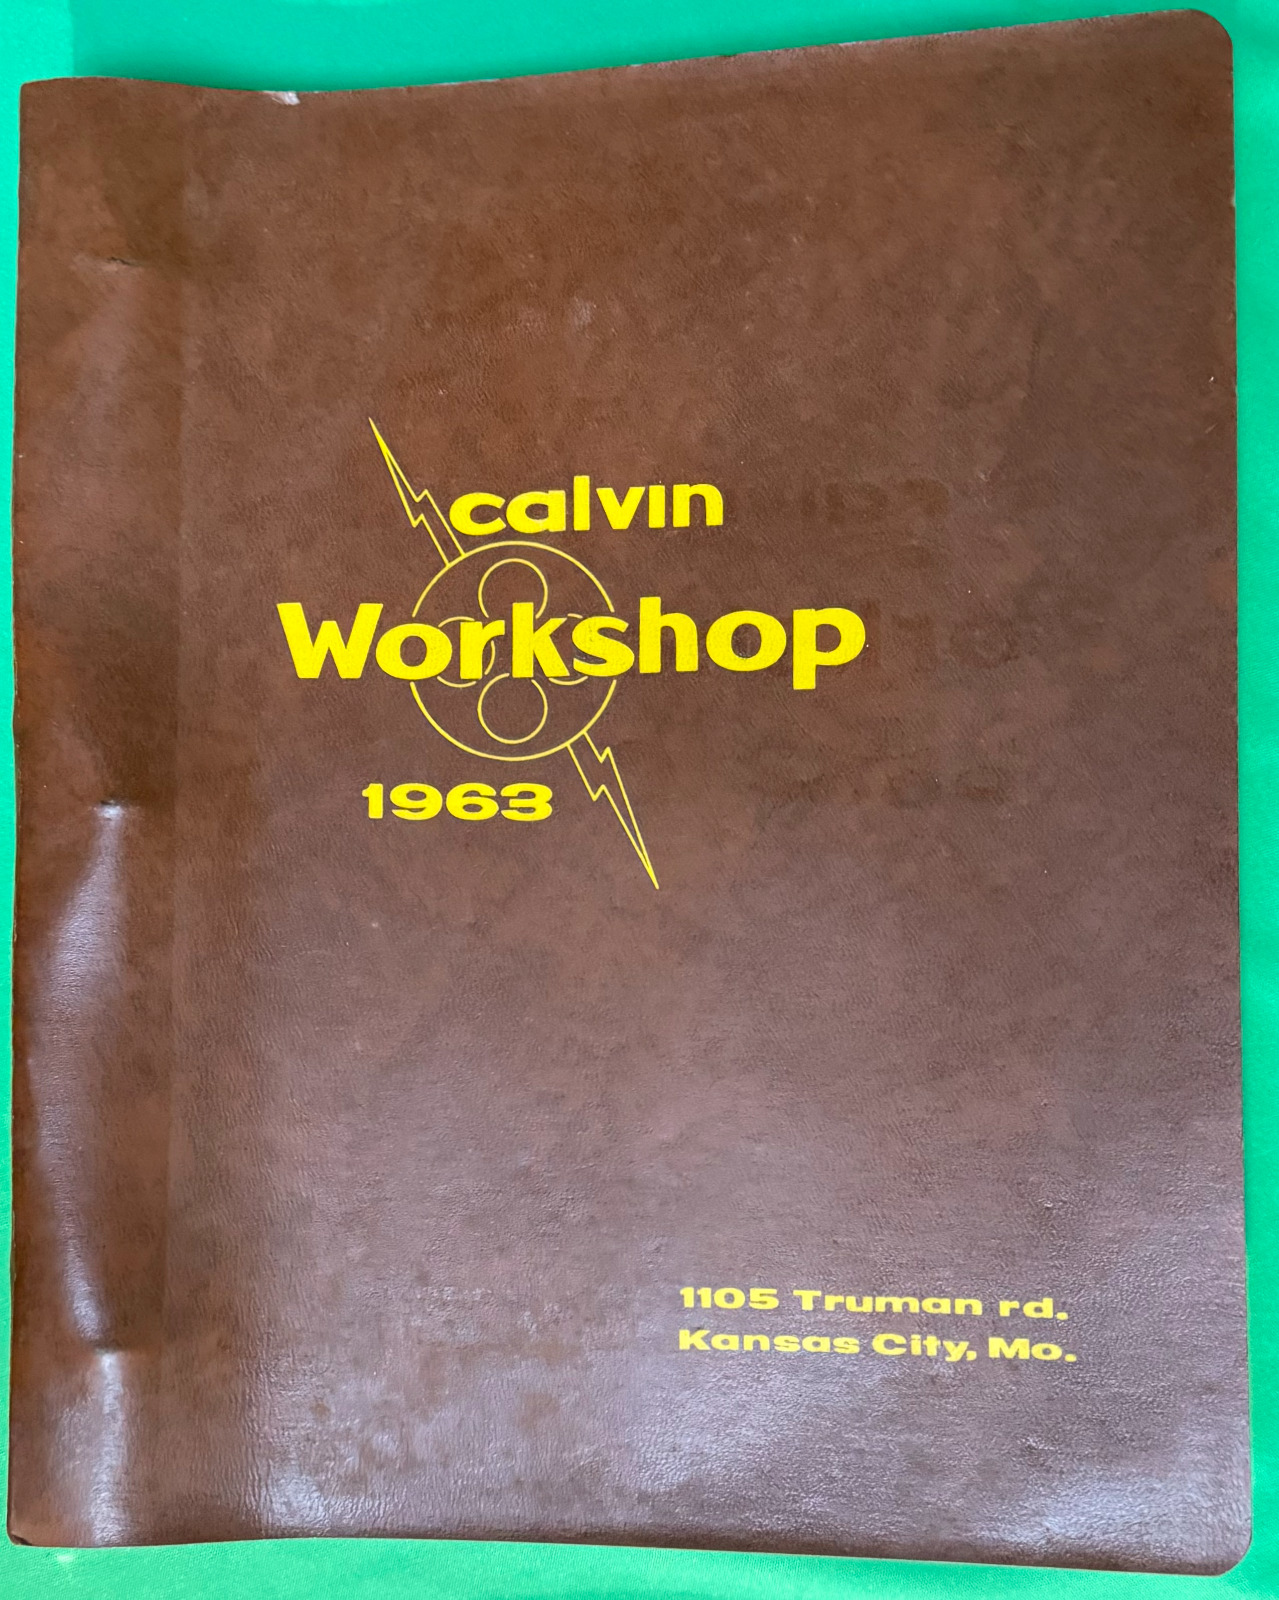 1963 CALVIN WORKSHOP Annual 16mm Industrial Film Production Seminar Manual RARE